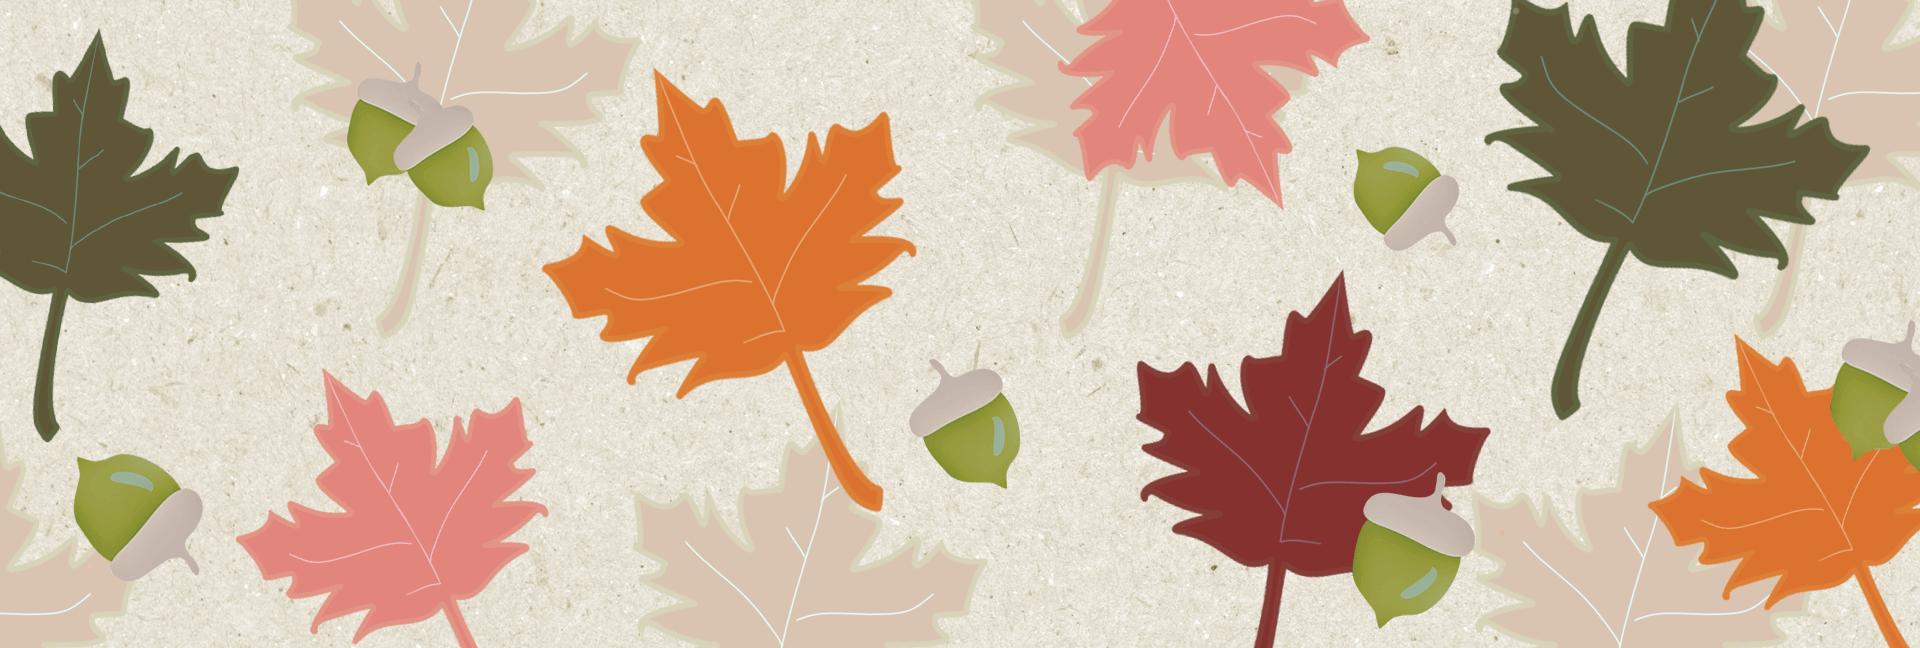 Fall leaves and acorns.